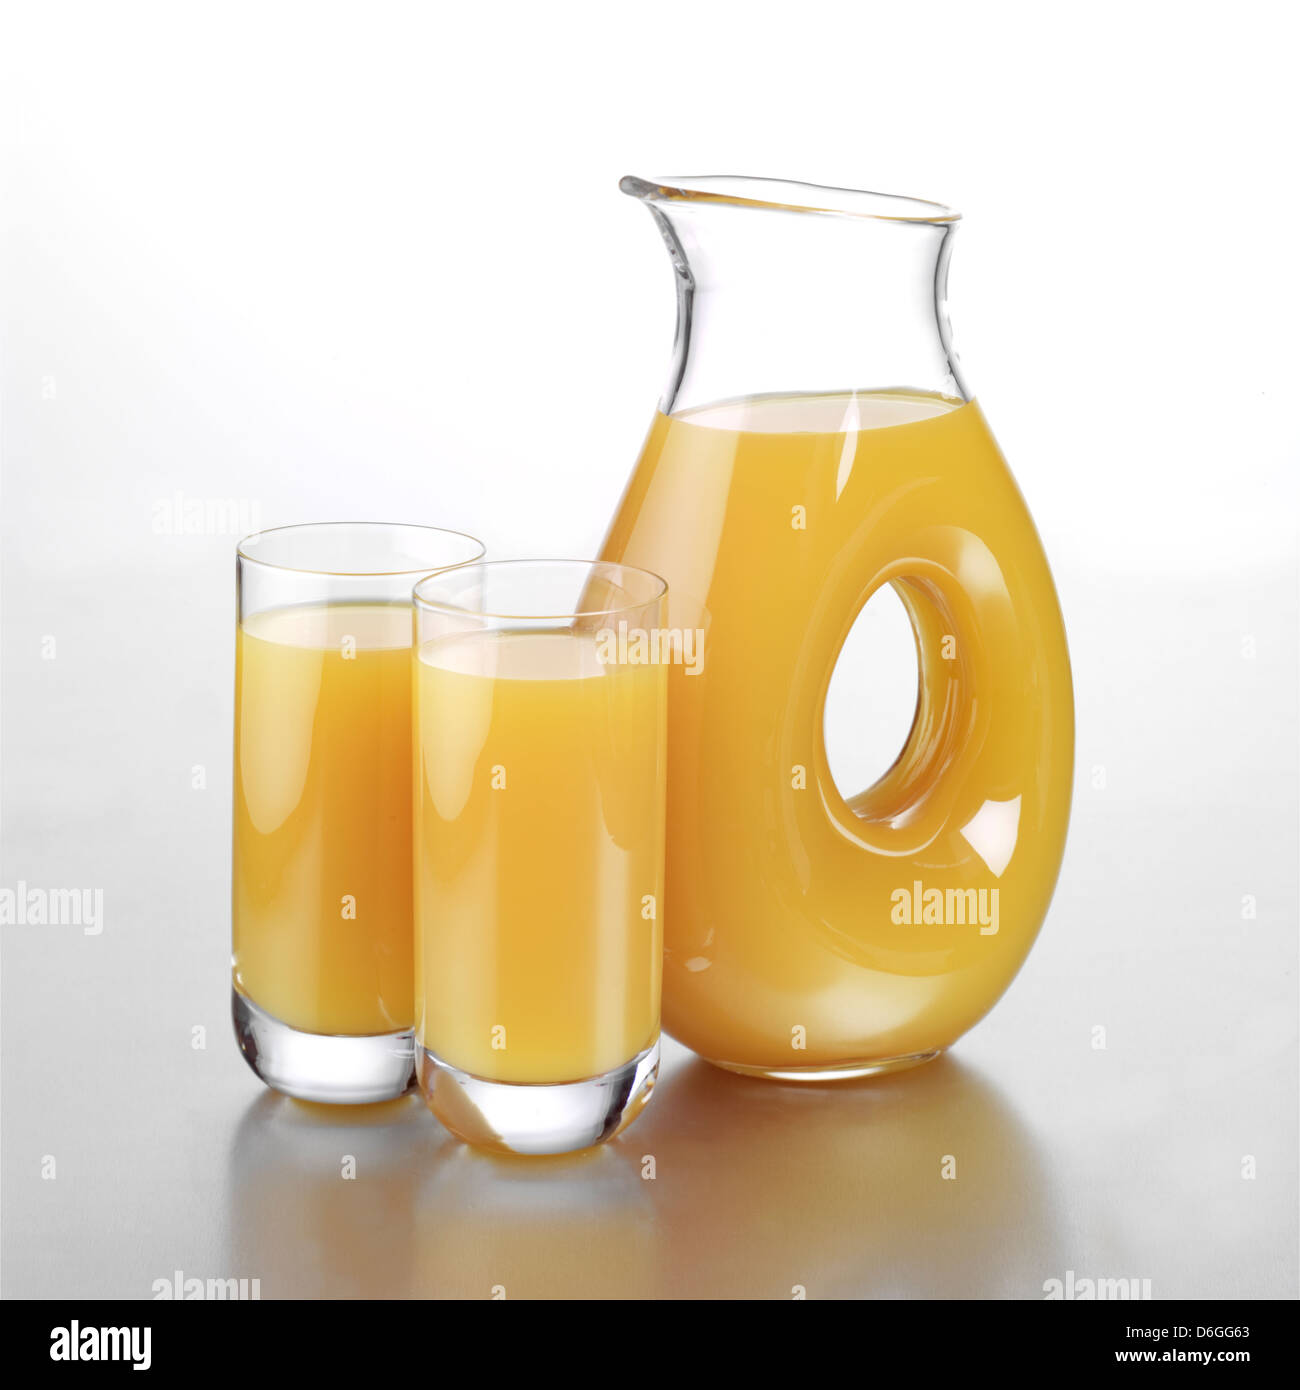 Jug of Mango and Orange Juice with Two Full Glasses Stock Photo - Alamy